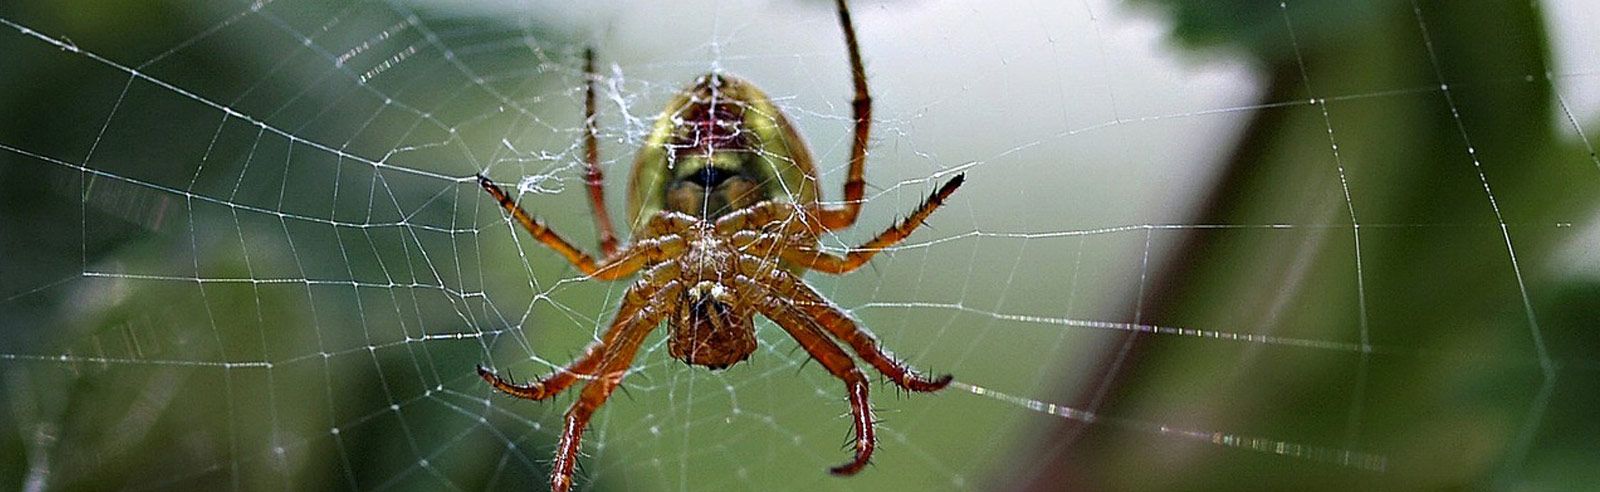 Integrated Spider Management